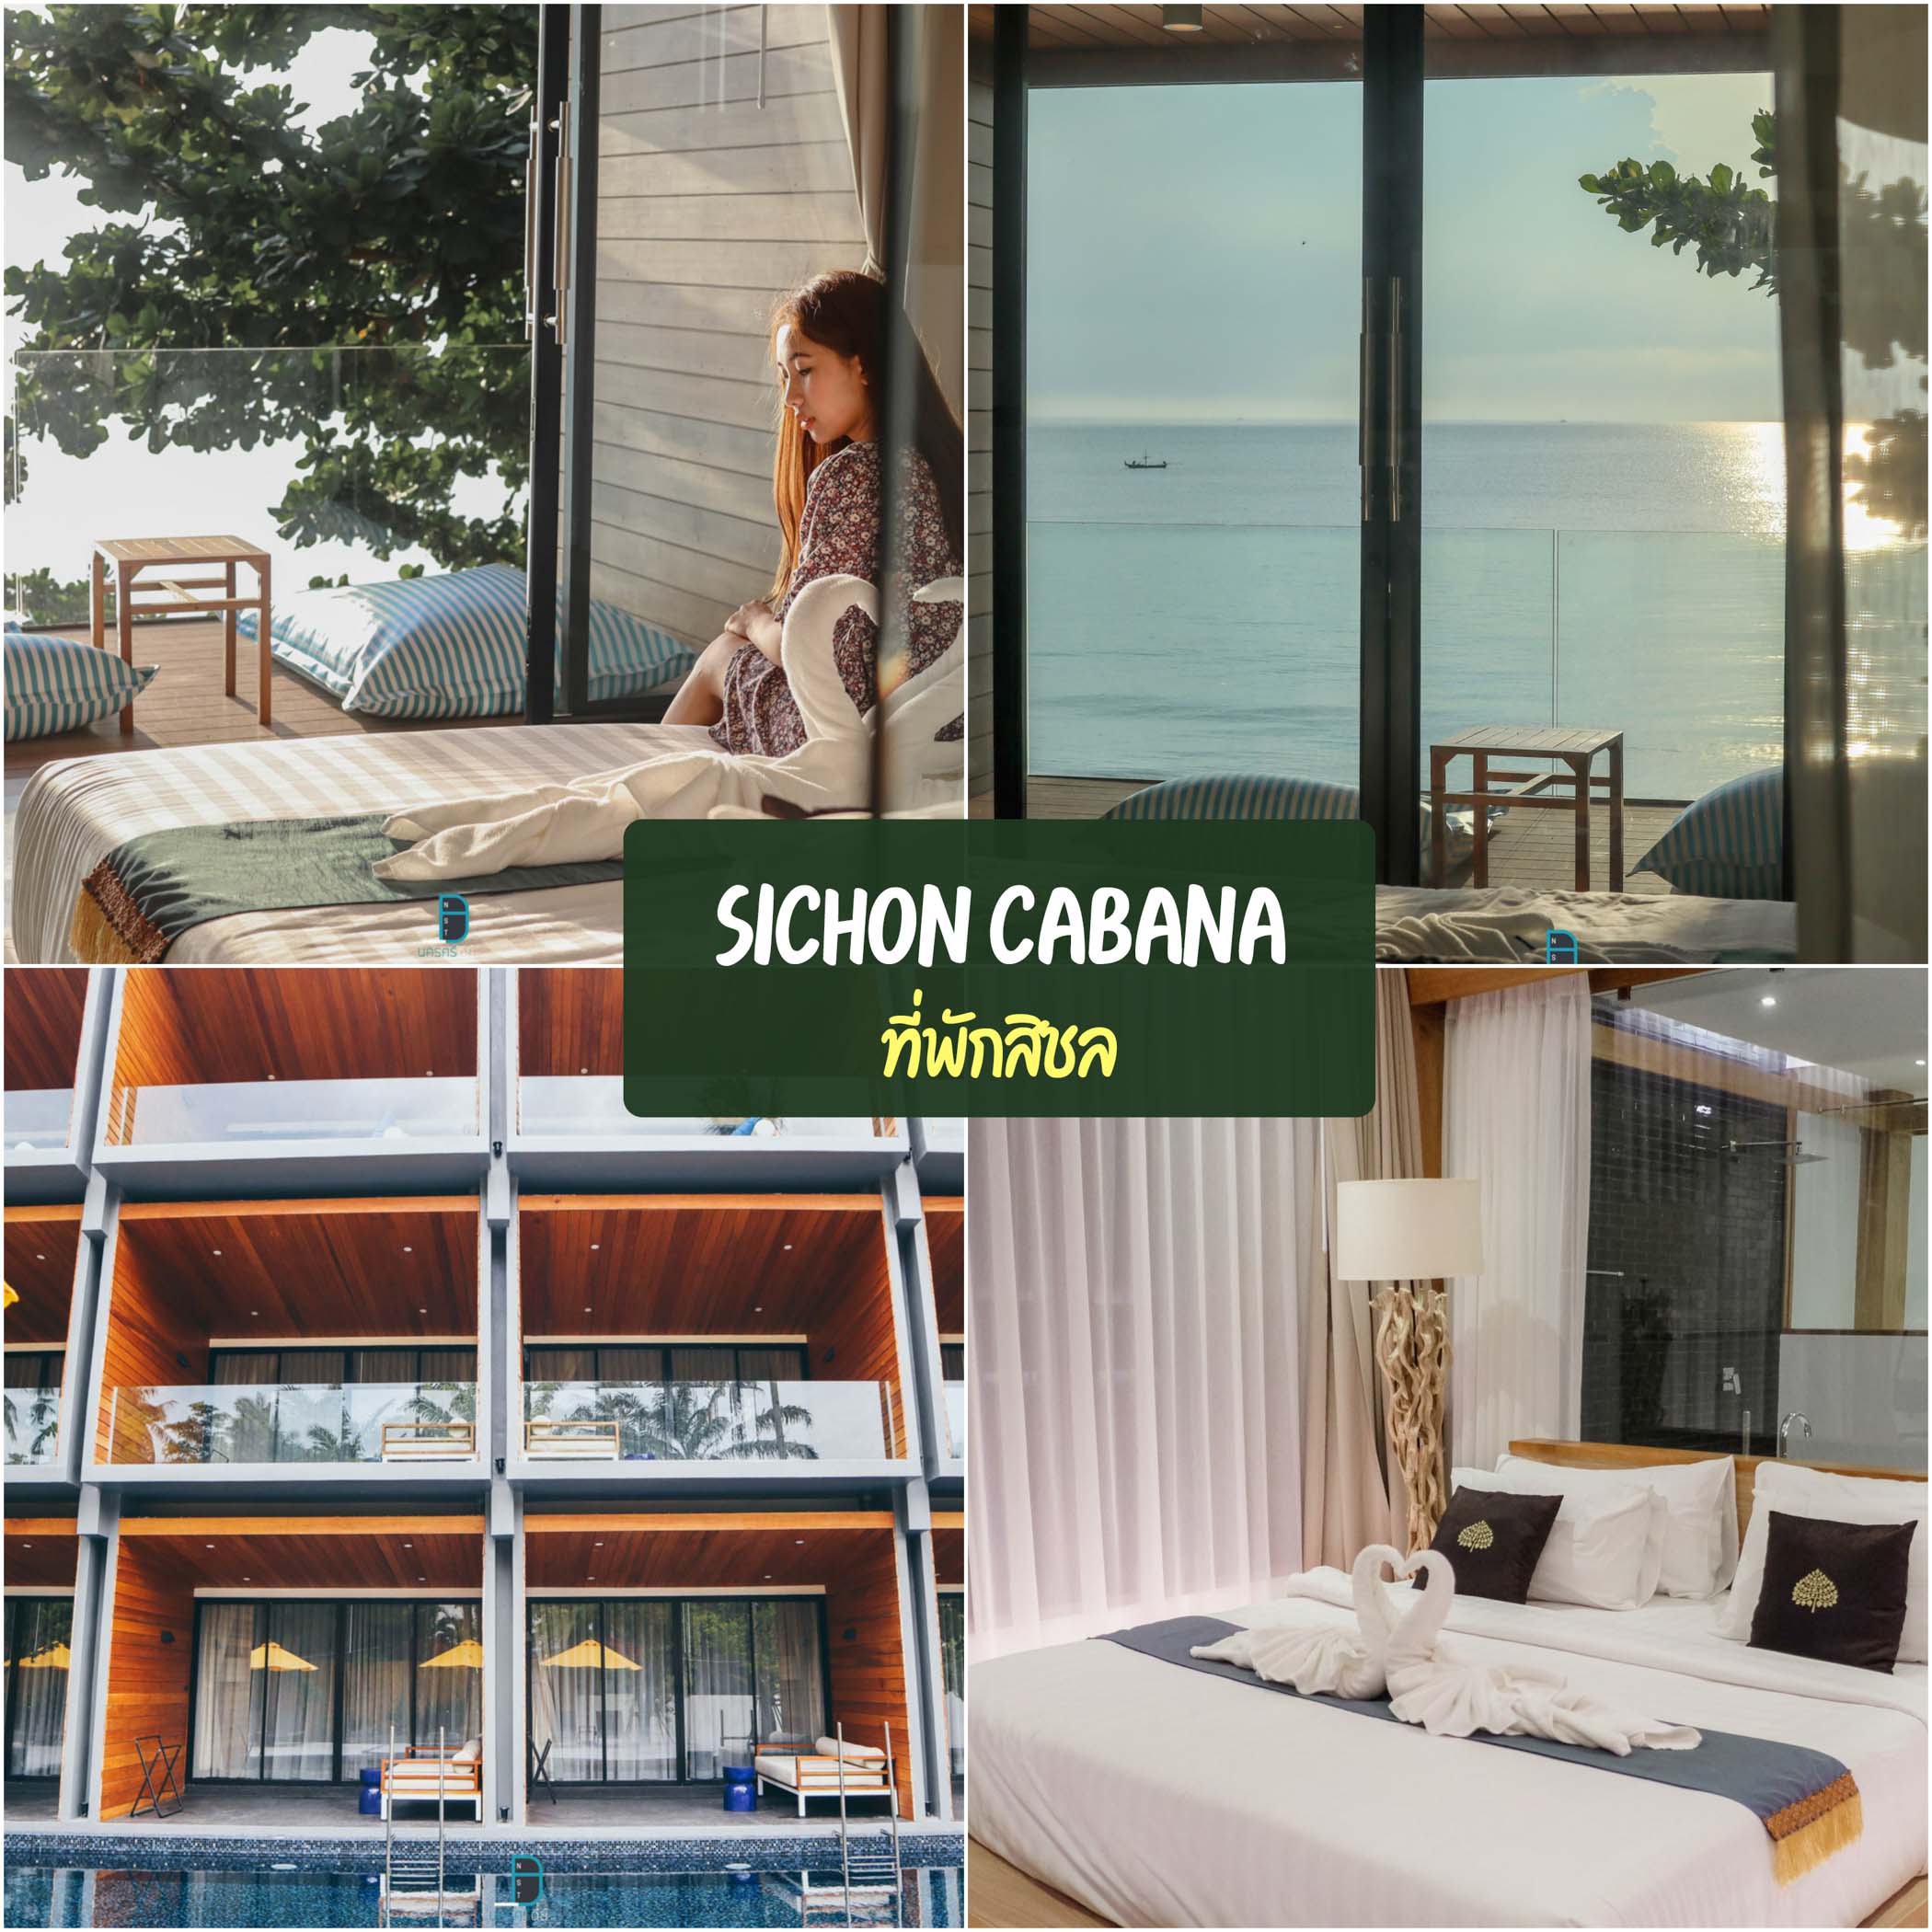 Sichon-Cabana-Beach-Resort-สิชลคาบาน่า -รีสอร์ทสุดสวยพร้อมคาเฟ่ชิวๆริมทะเล-Blue-Surf-Cafe-ห้องสุดสวยมีสไตล์พร้อมอ่างจากุชชี่ฟินๆ-วิวทะเล
 ที่พัก,นครศรีธรรมราช,วัดเจดีย์,ตาไข่,โรมแรม,รีสอร์ท,ธรรมชาติ,กลางเมือง,ห้องพัก,วิวหลักล้าน,คาเฟ่